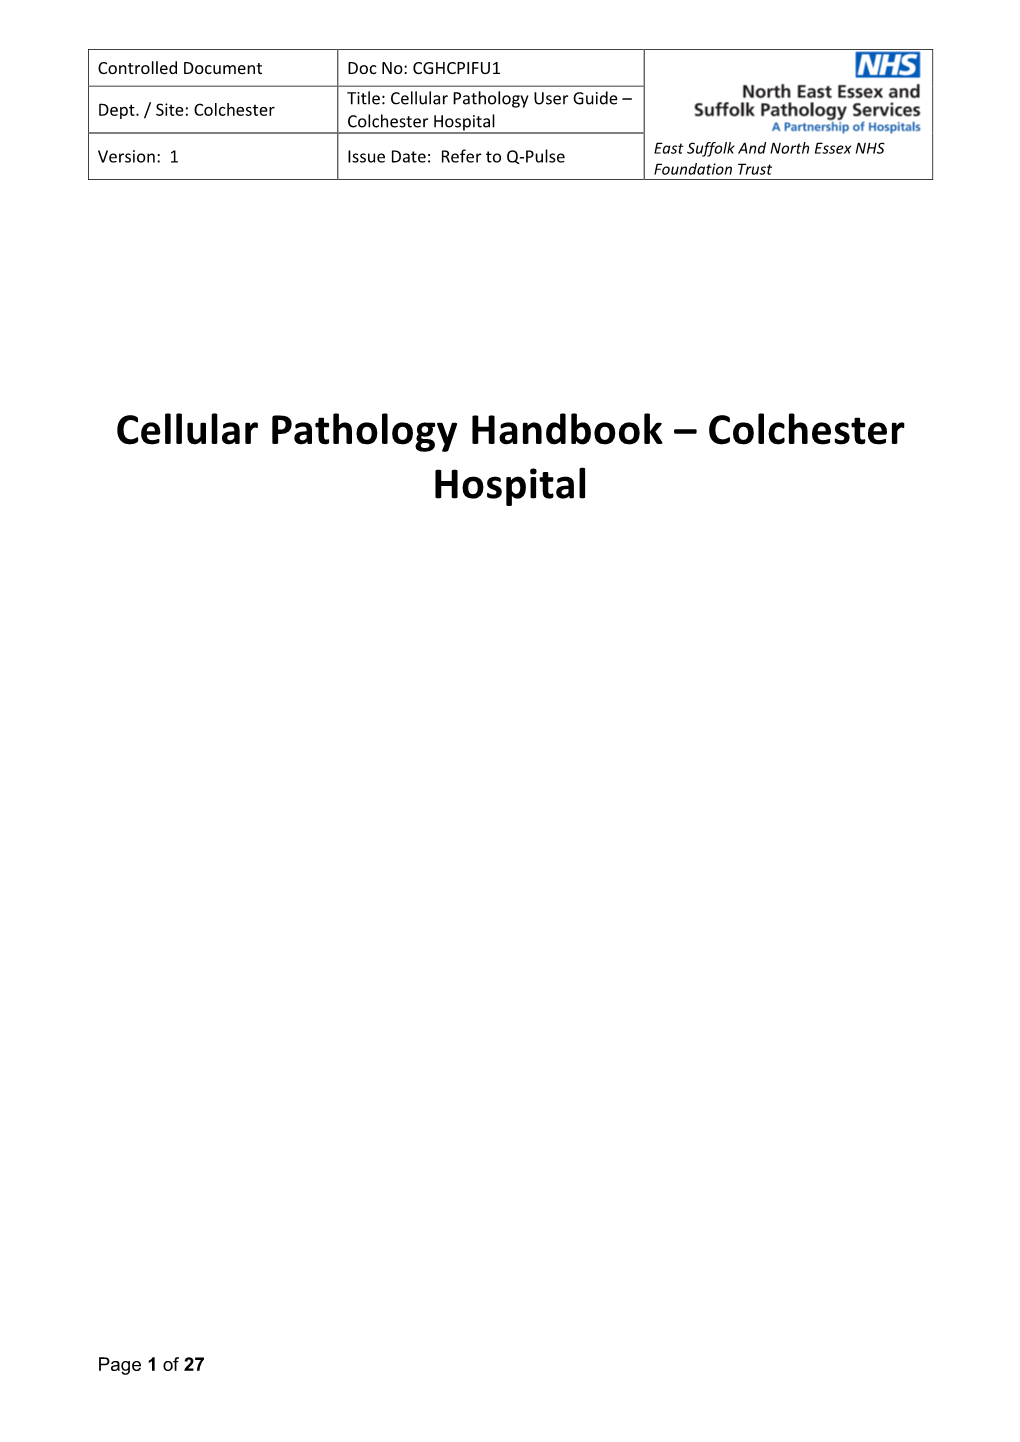 Cellular Pathology Handbook – Colchester Hospital